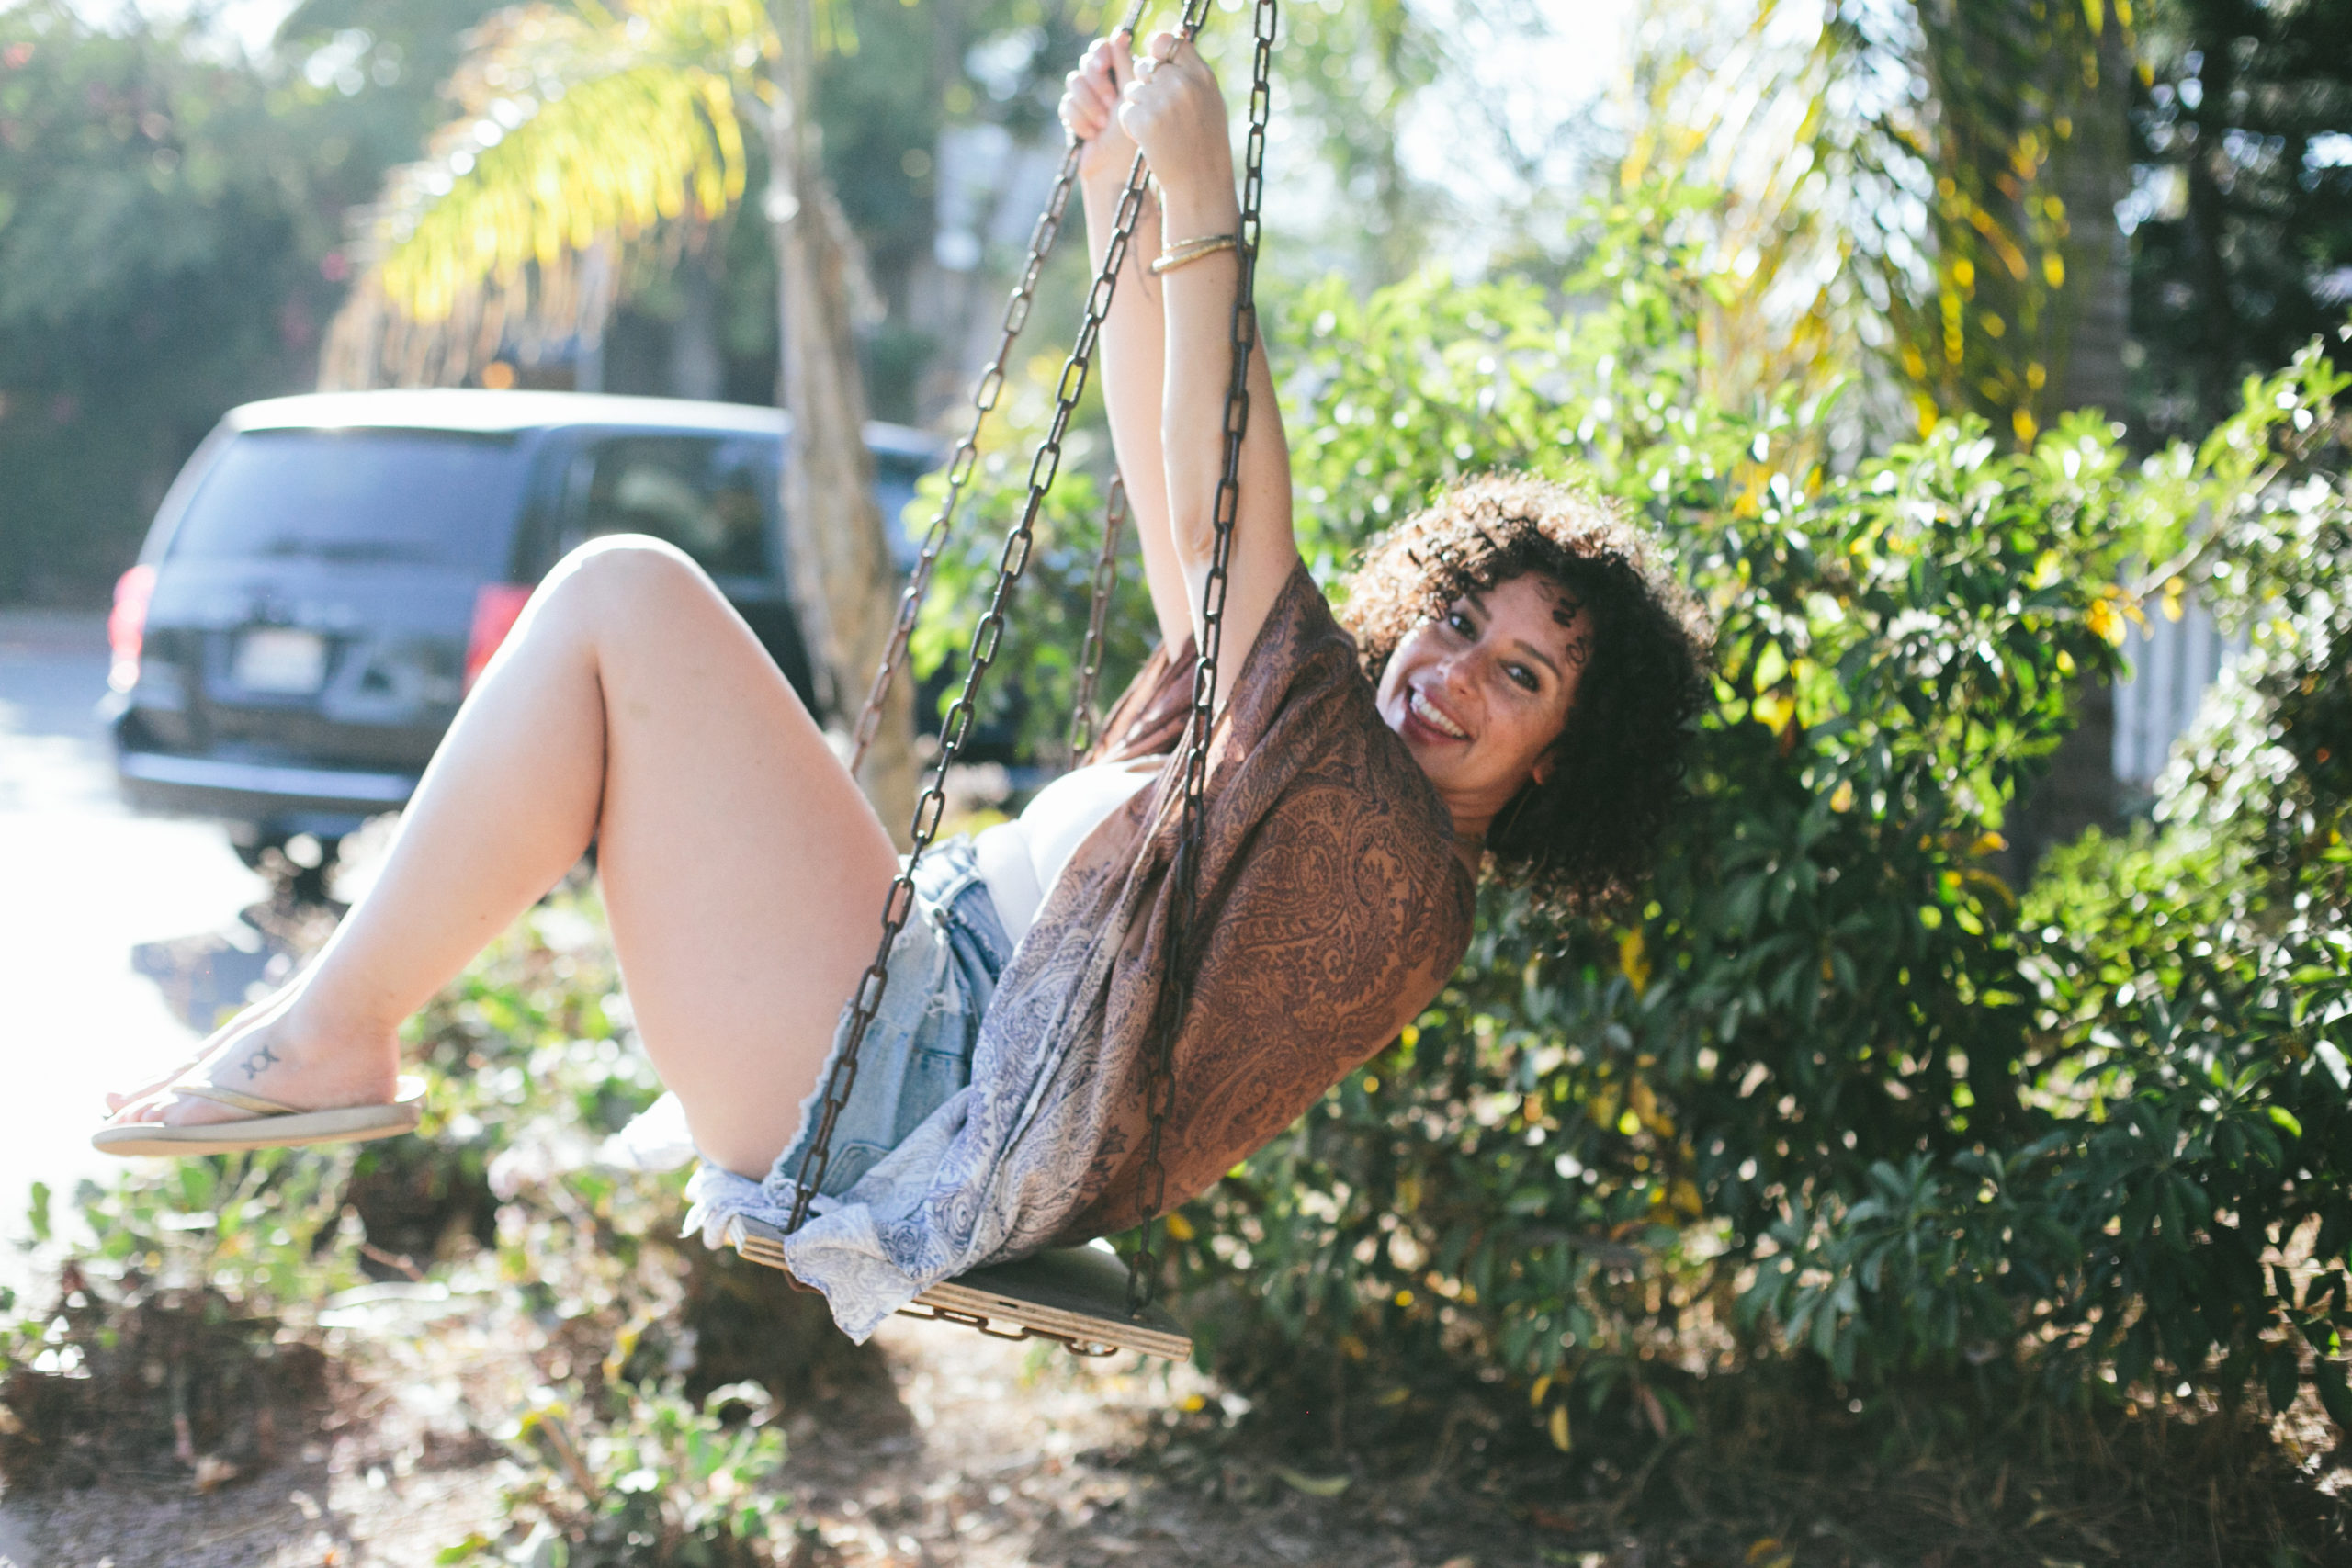 Elizabeth swinging in front of large plant wearing shorts